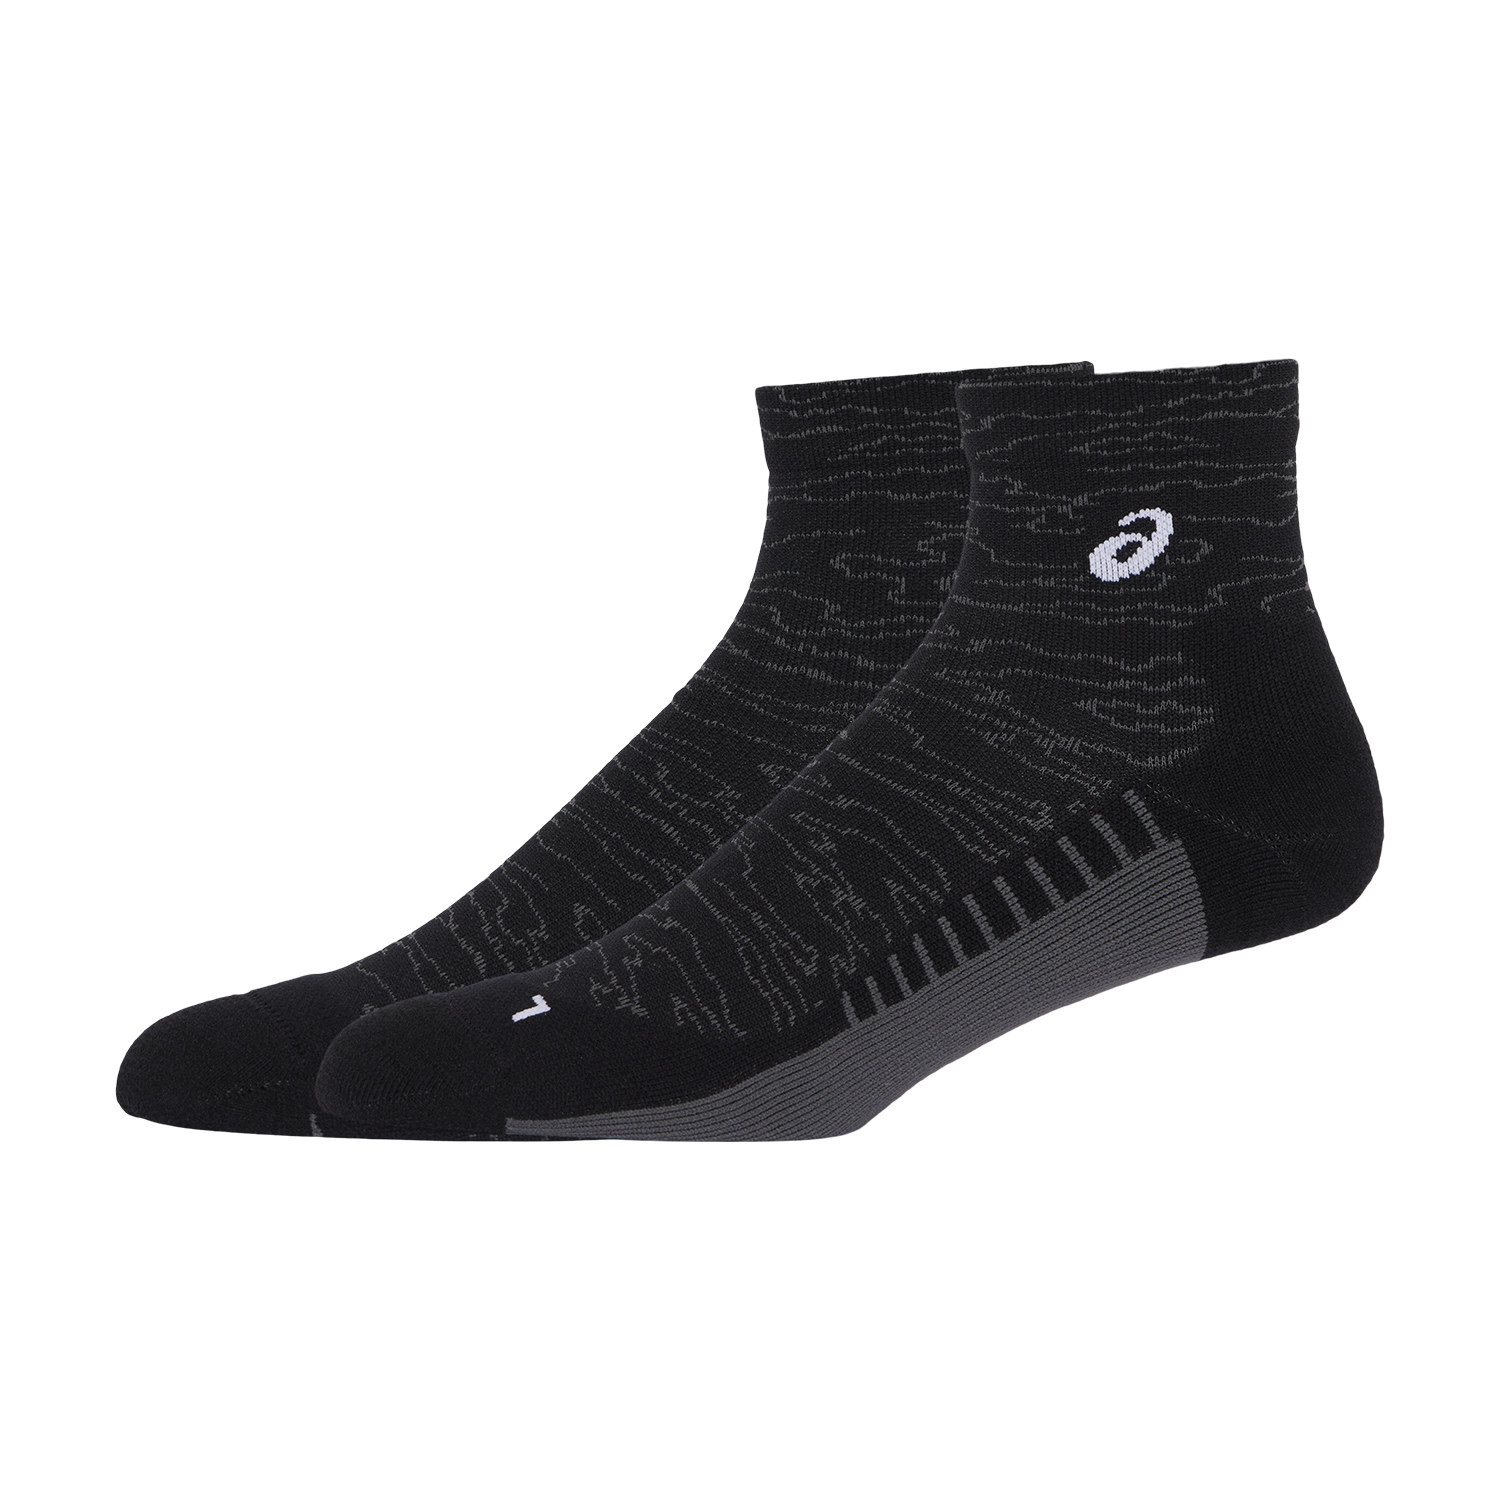 Asics Performance Quarter Socks - Black/Brilliant White